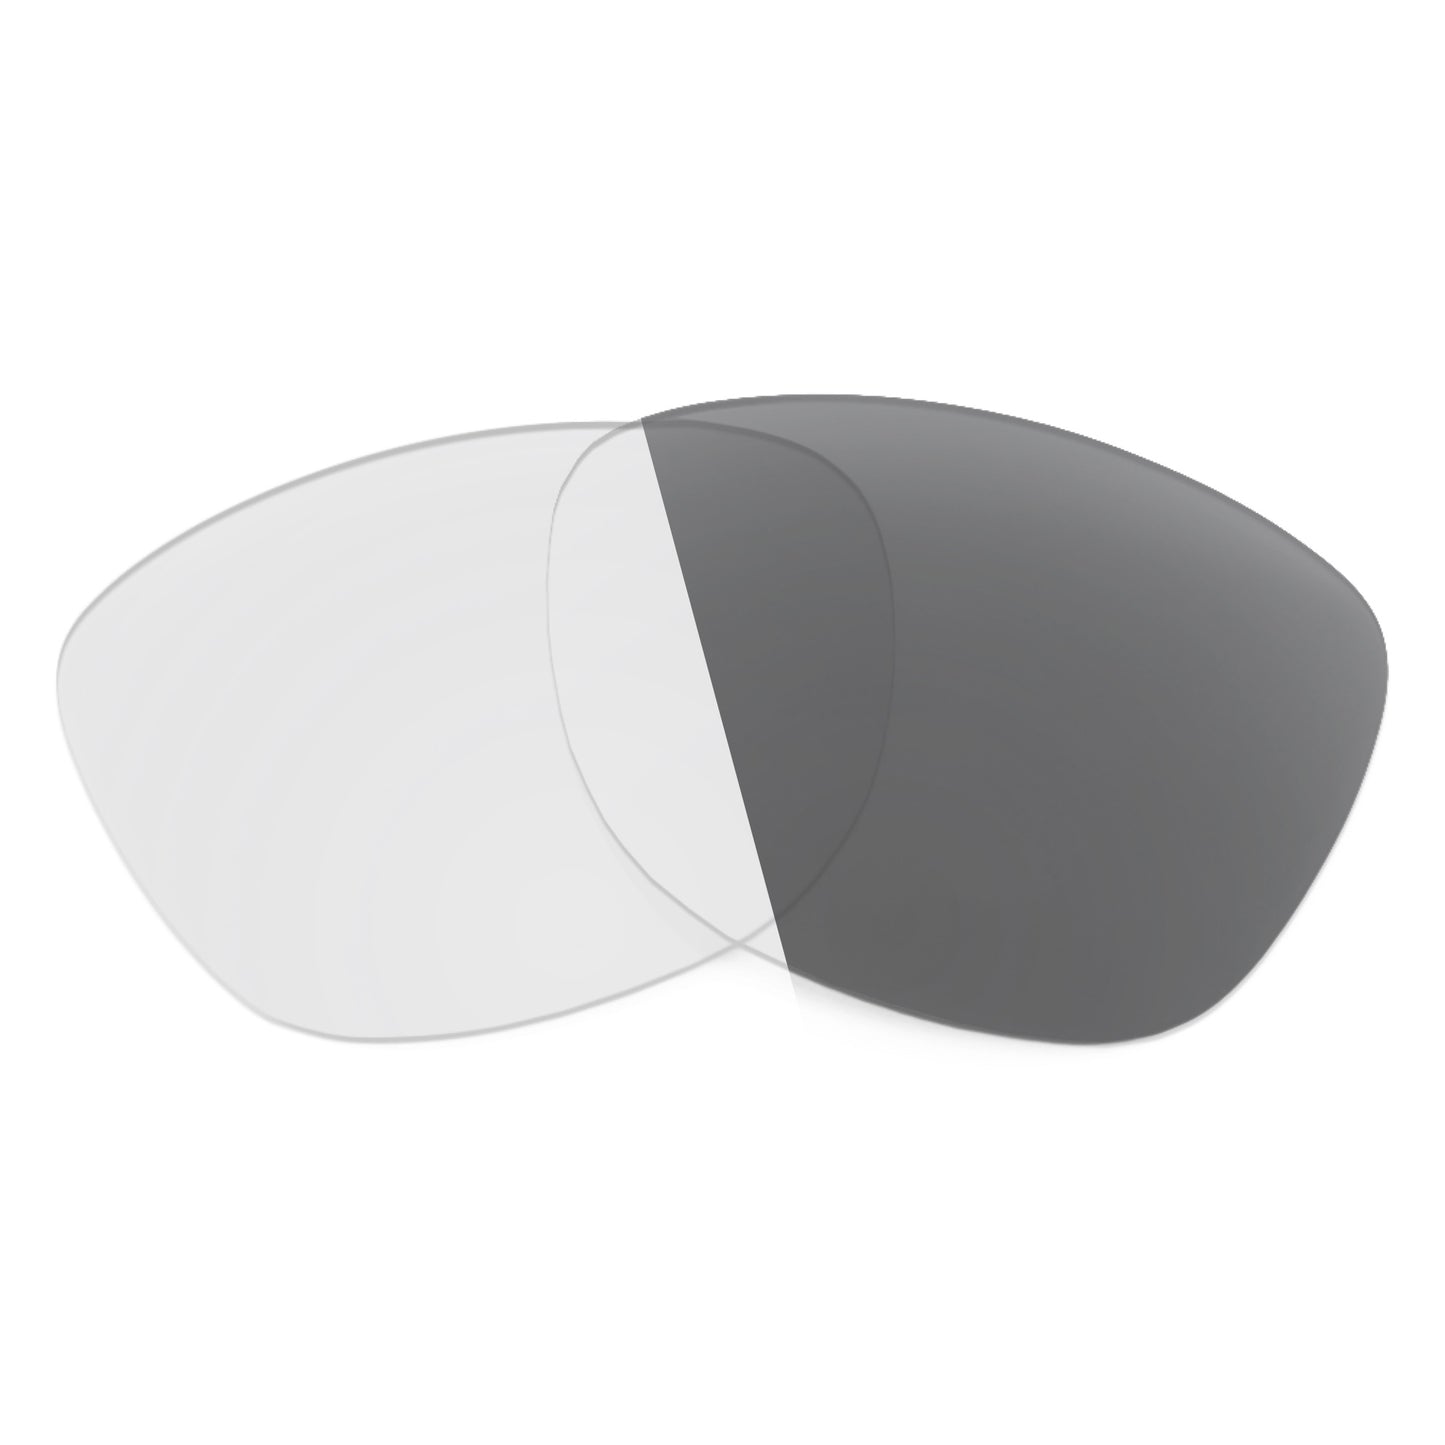 Revant replacement lenses for Spy Optic Tele Non-Polarized Adapt Gray Photochromic